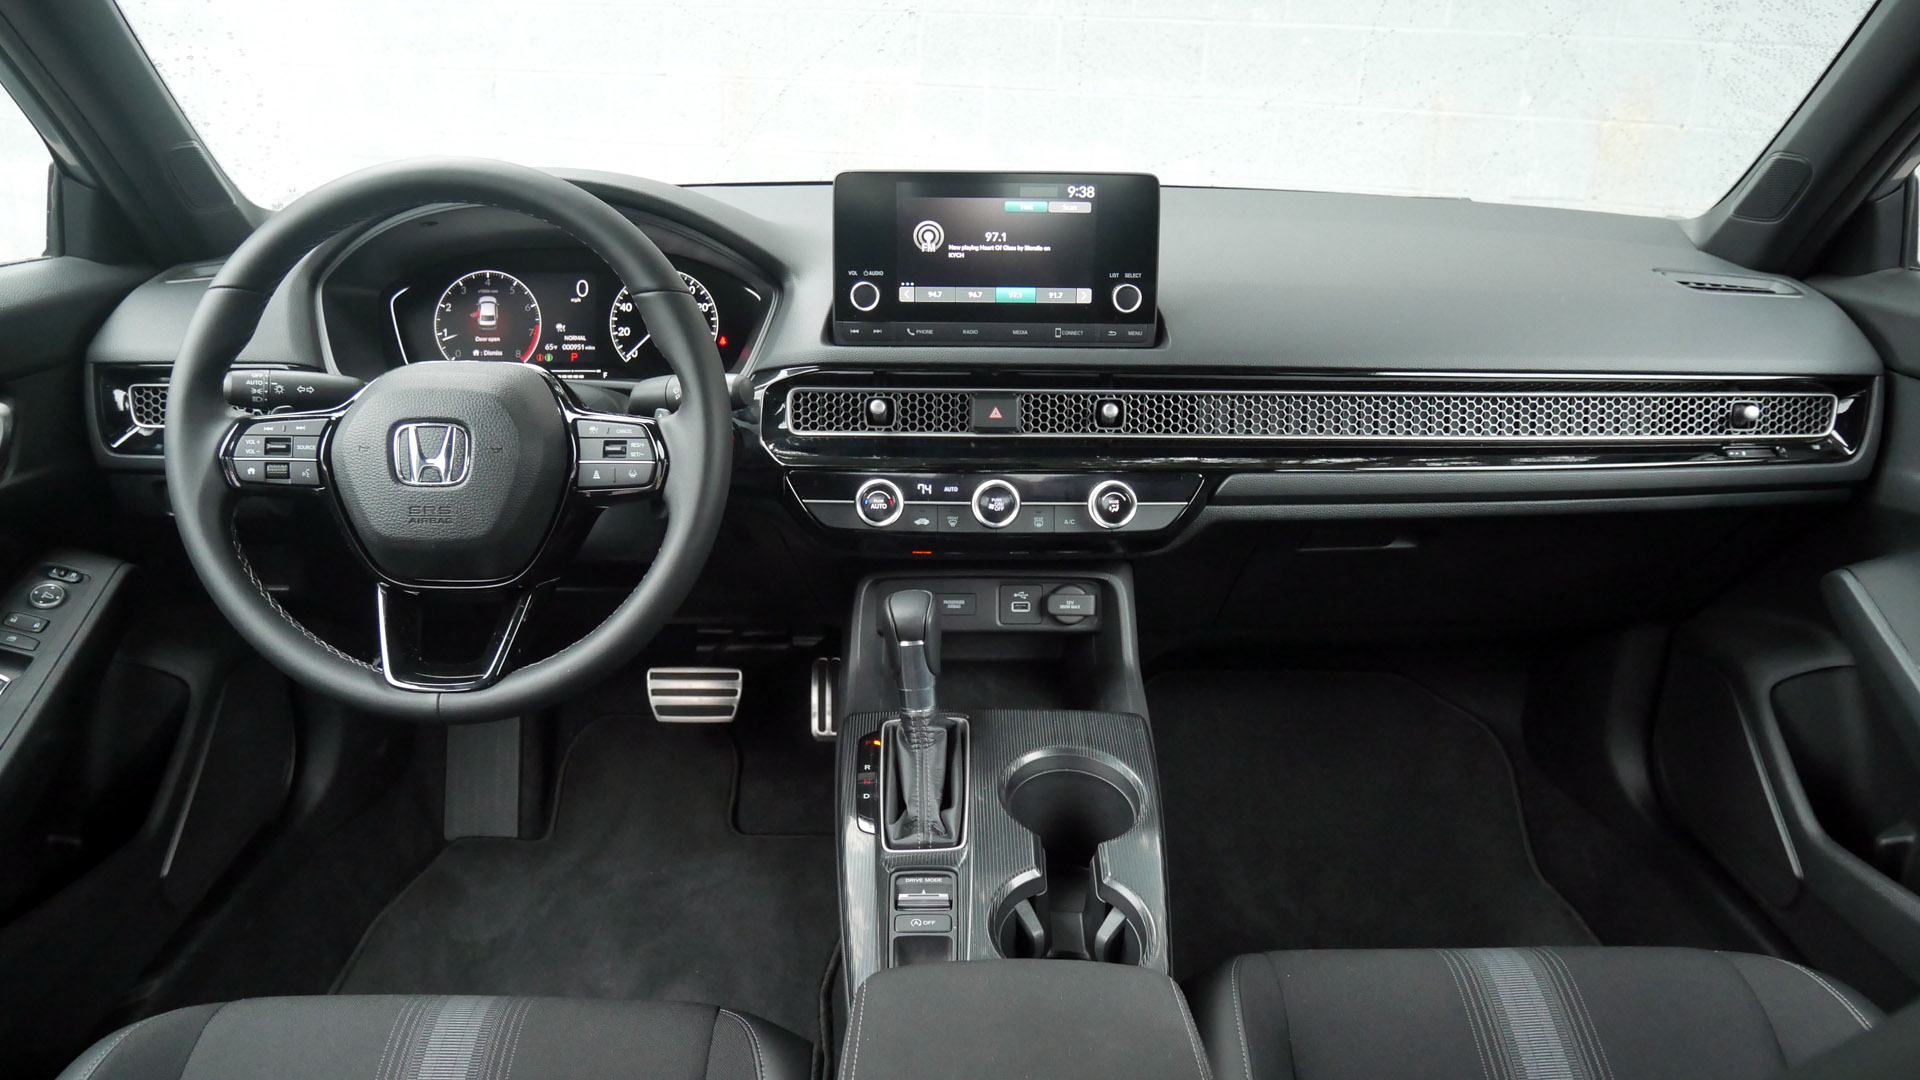 2022 Honda Civic Review | What's new, price, fuel economy